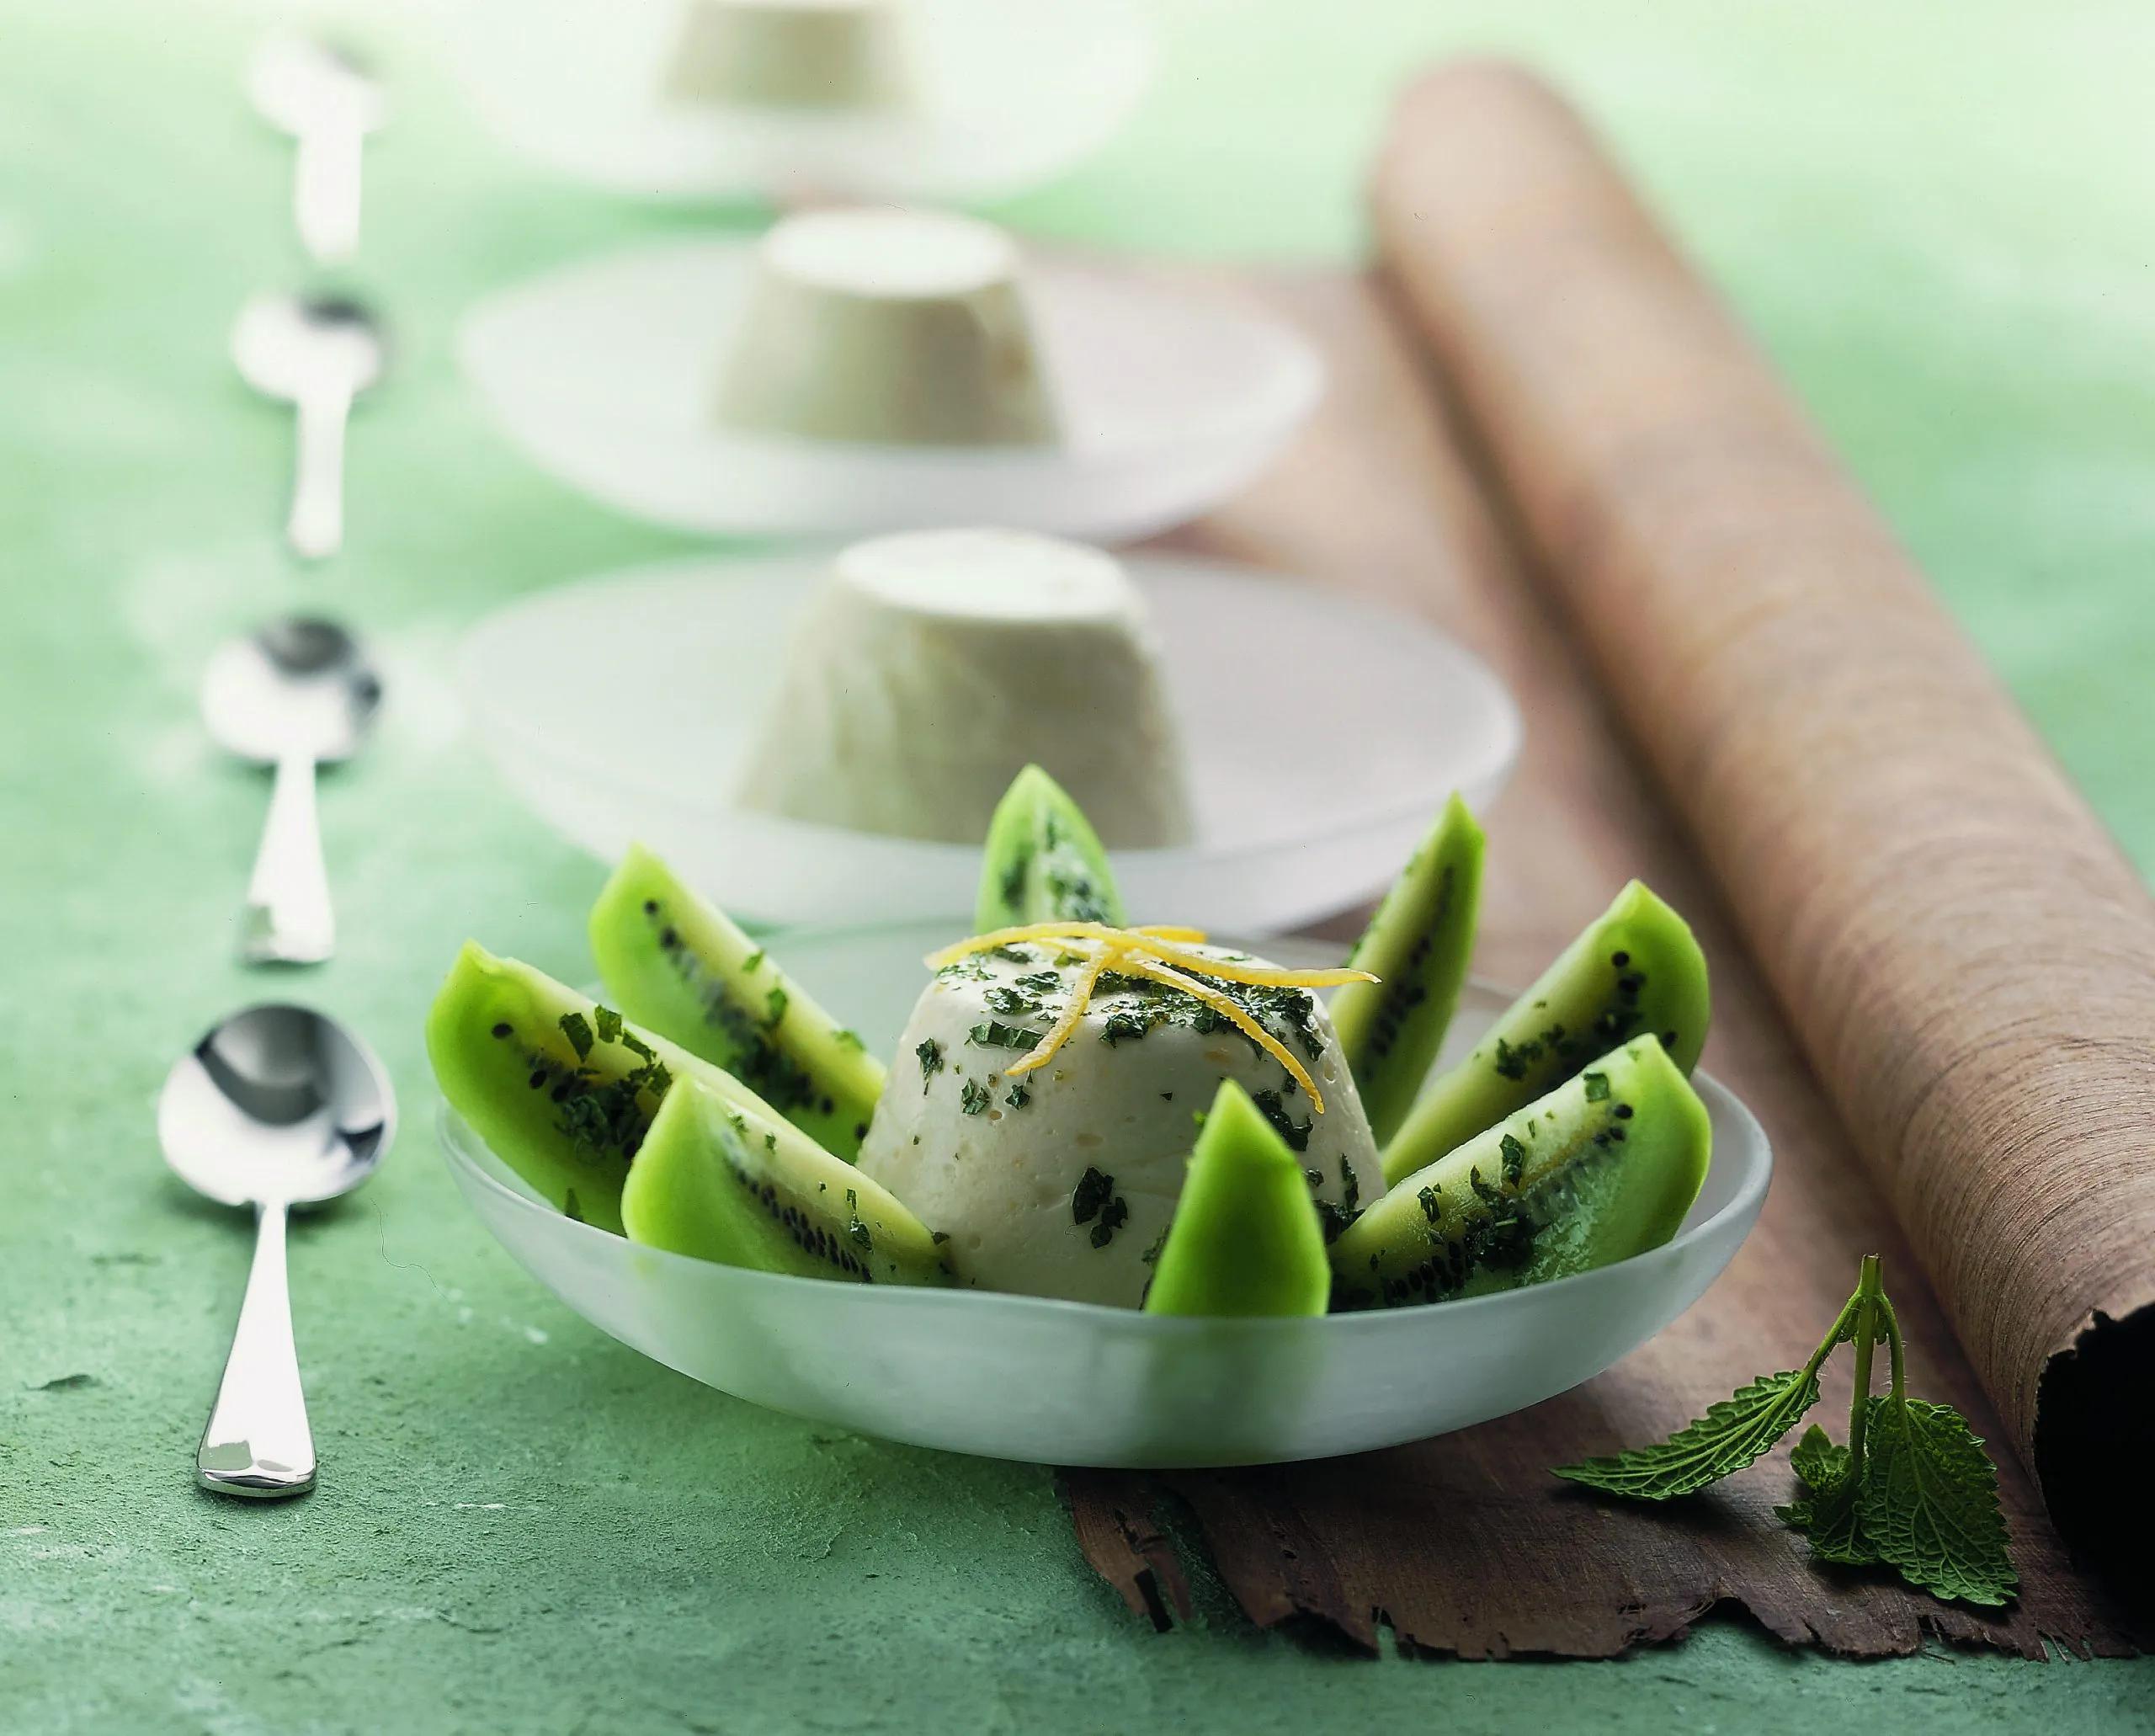 Zabaione Auf Feigen Kiwi Salat — Rezepte Suchen